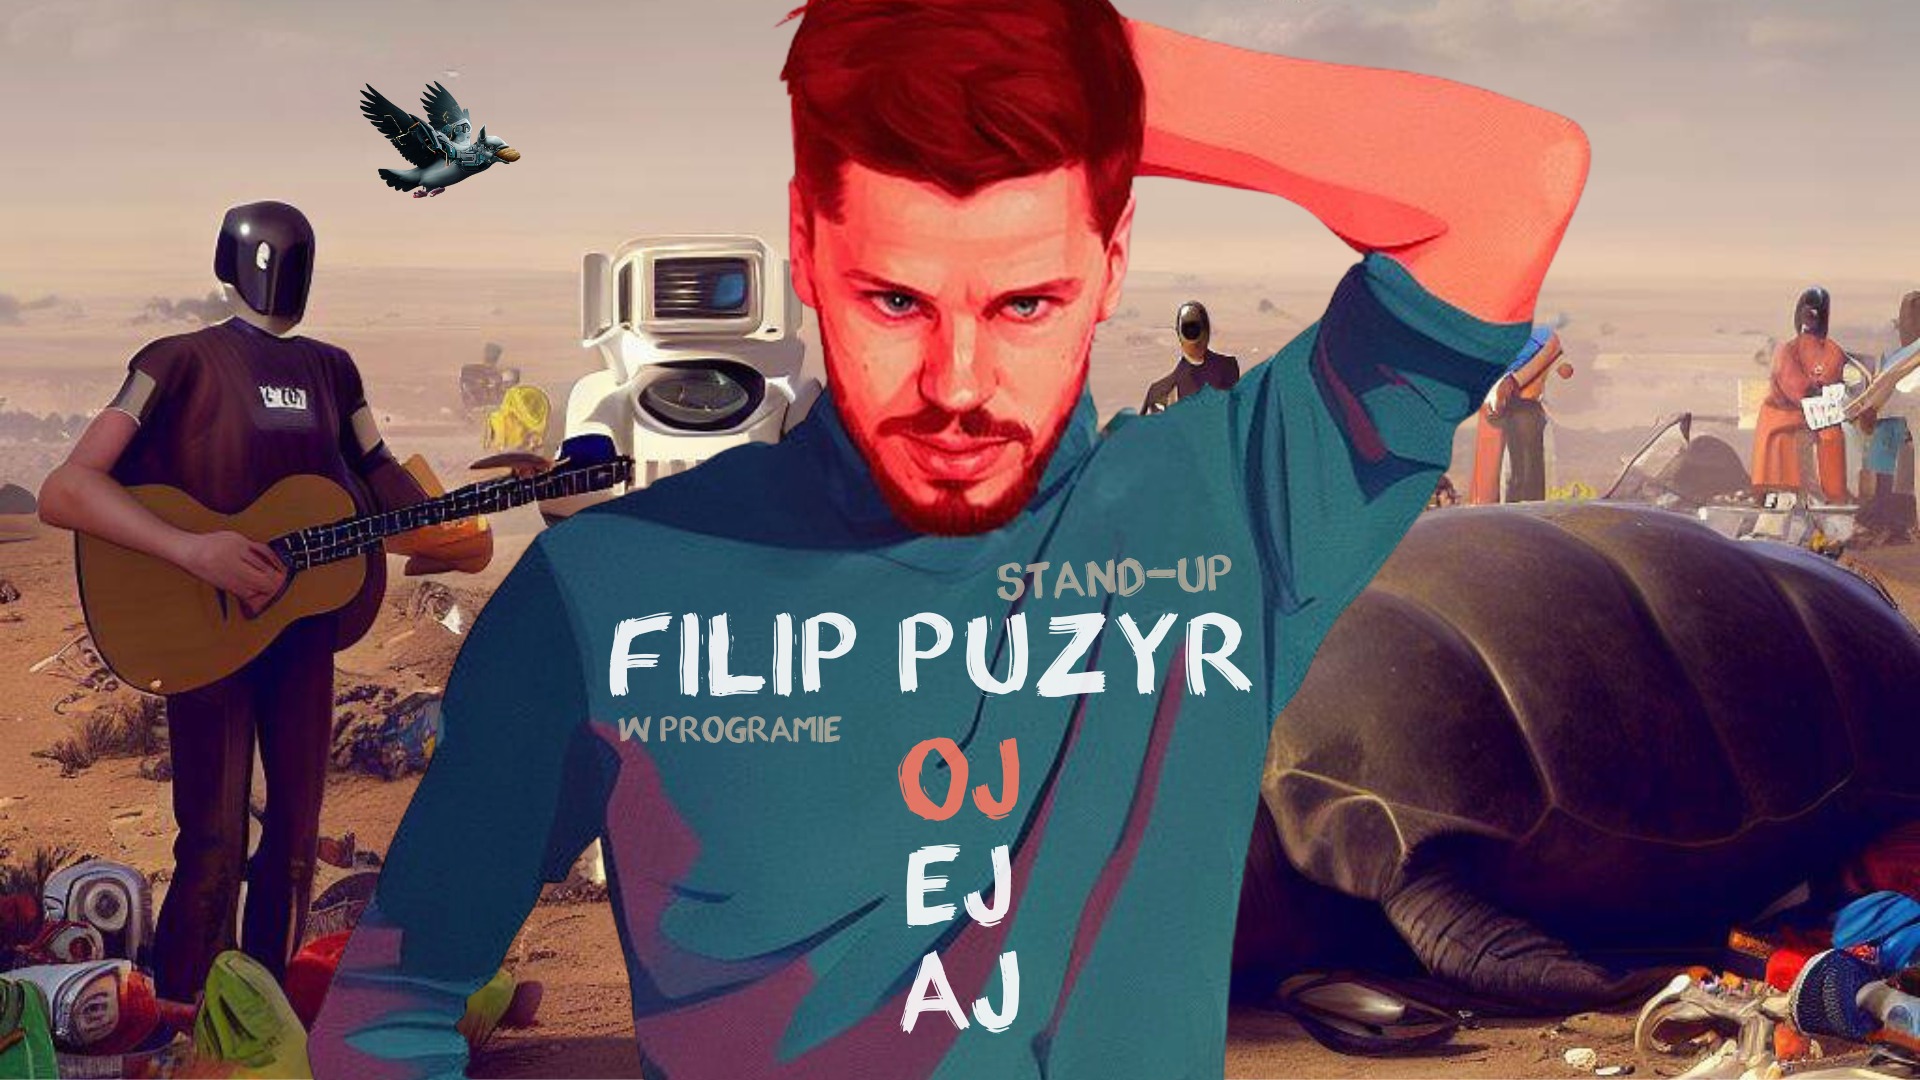 Filip Puzyr